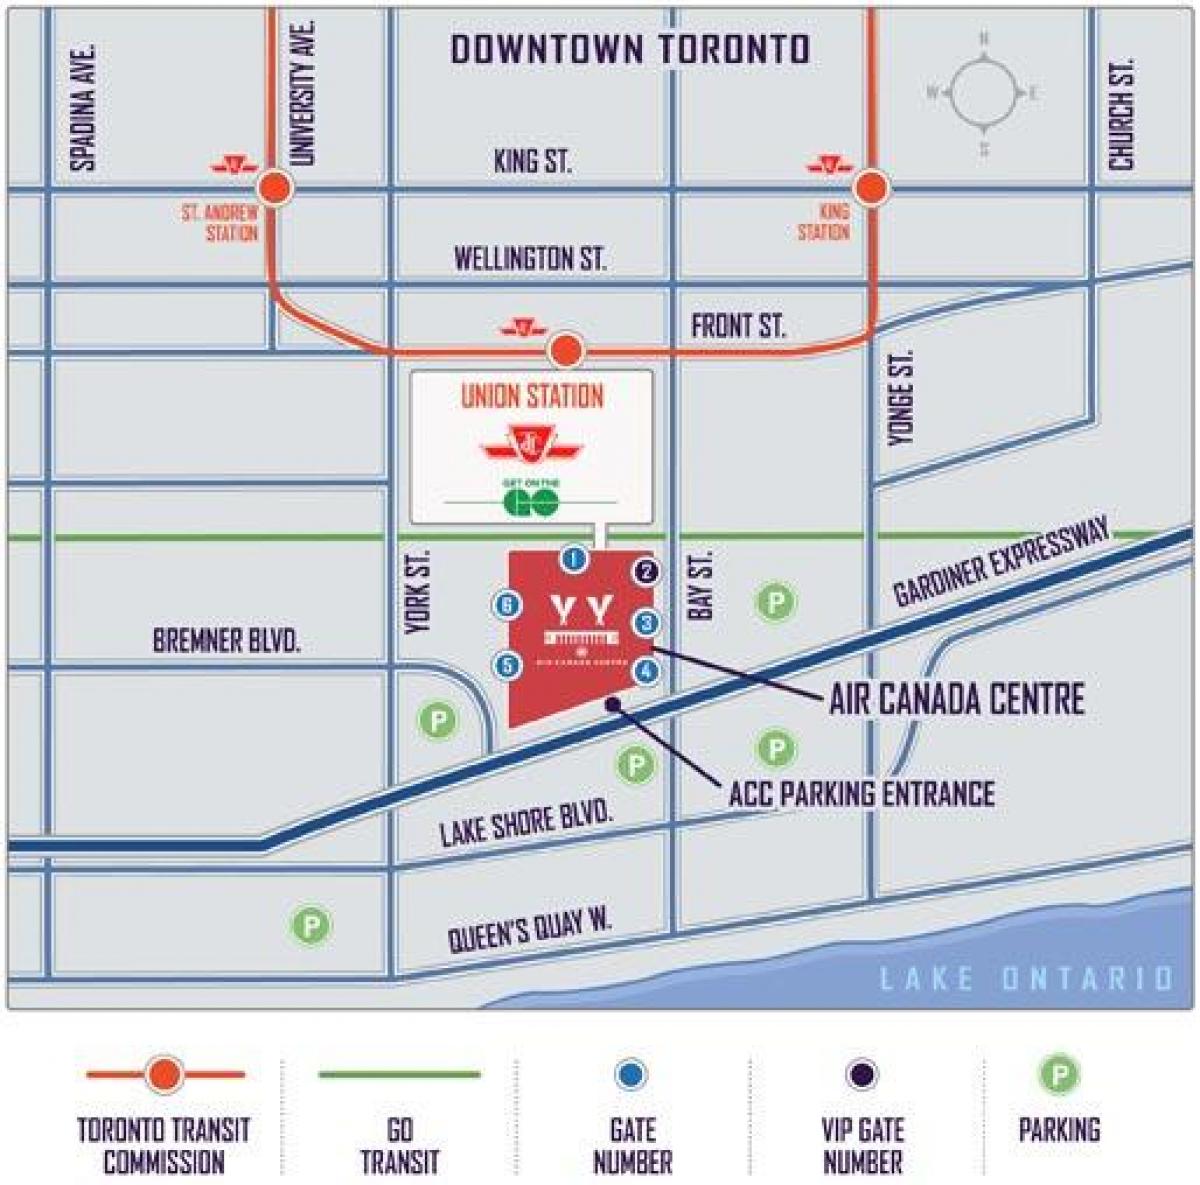 Peta dari Air Canada Centre parkir - ACC